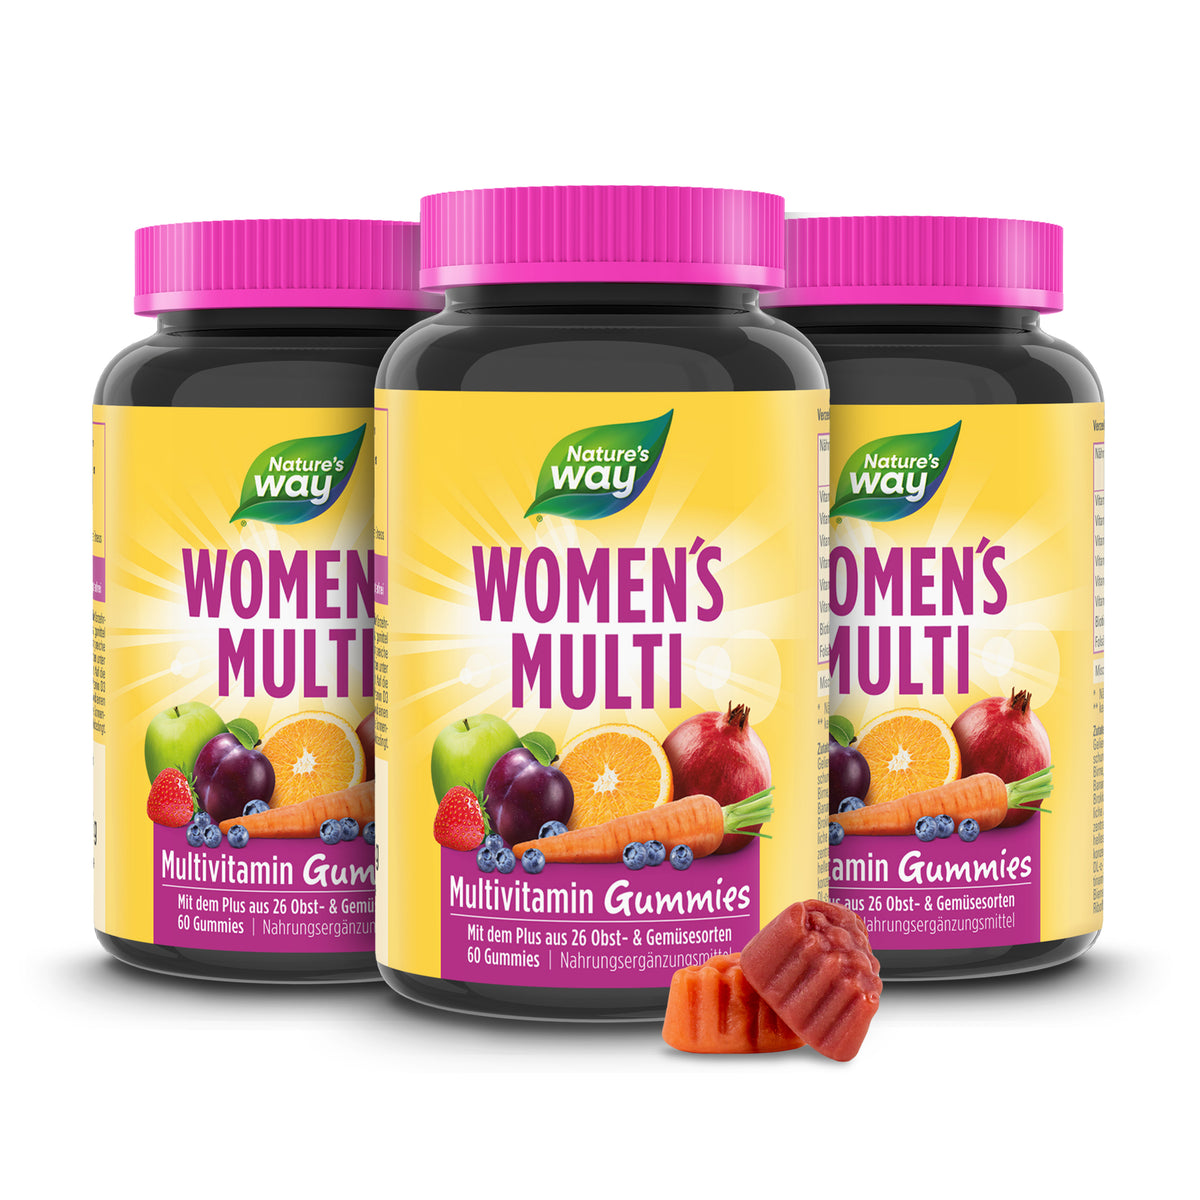 Women’s Multi Multivitamin Gummies